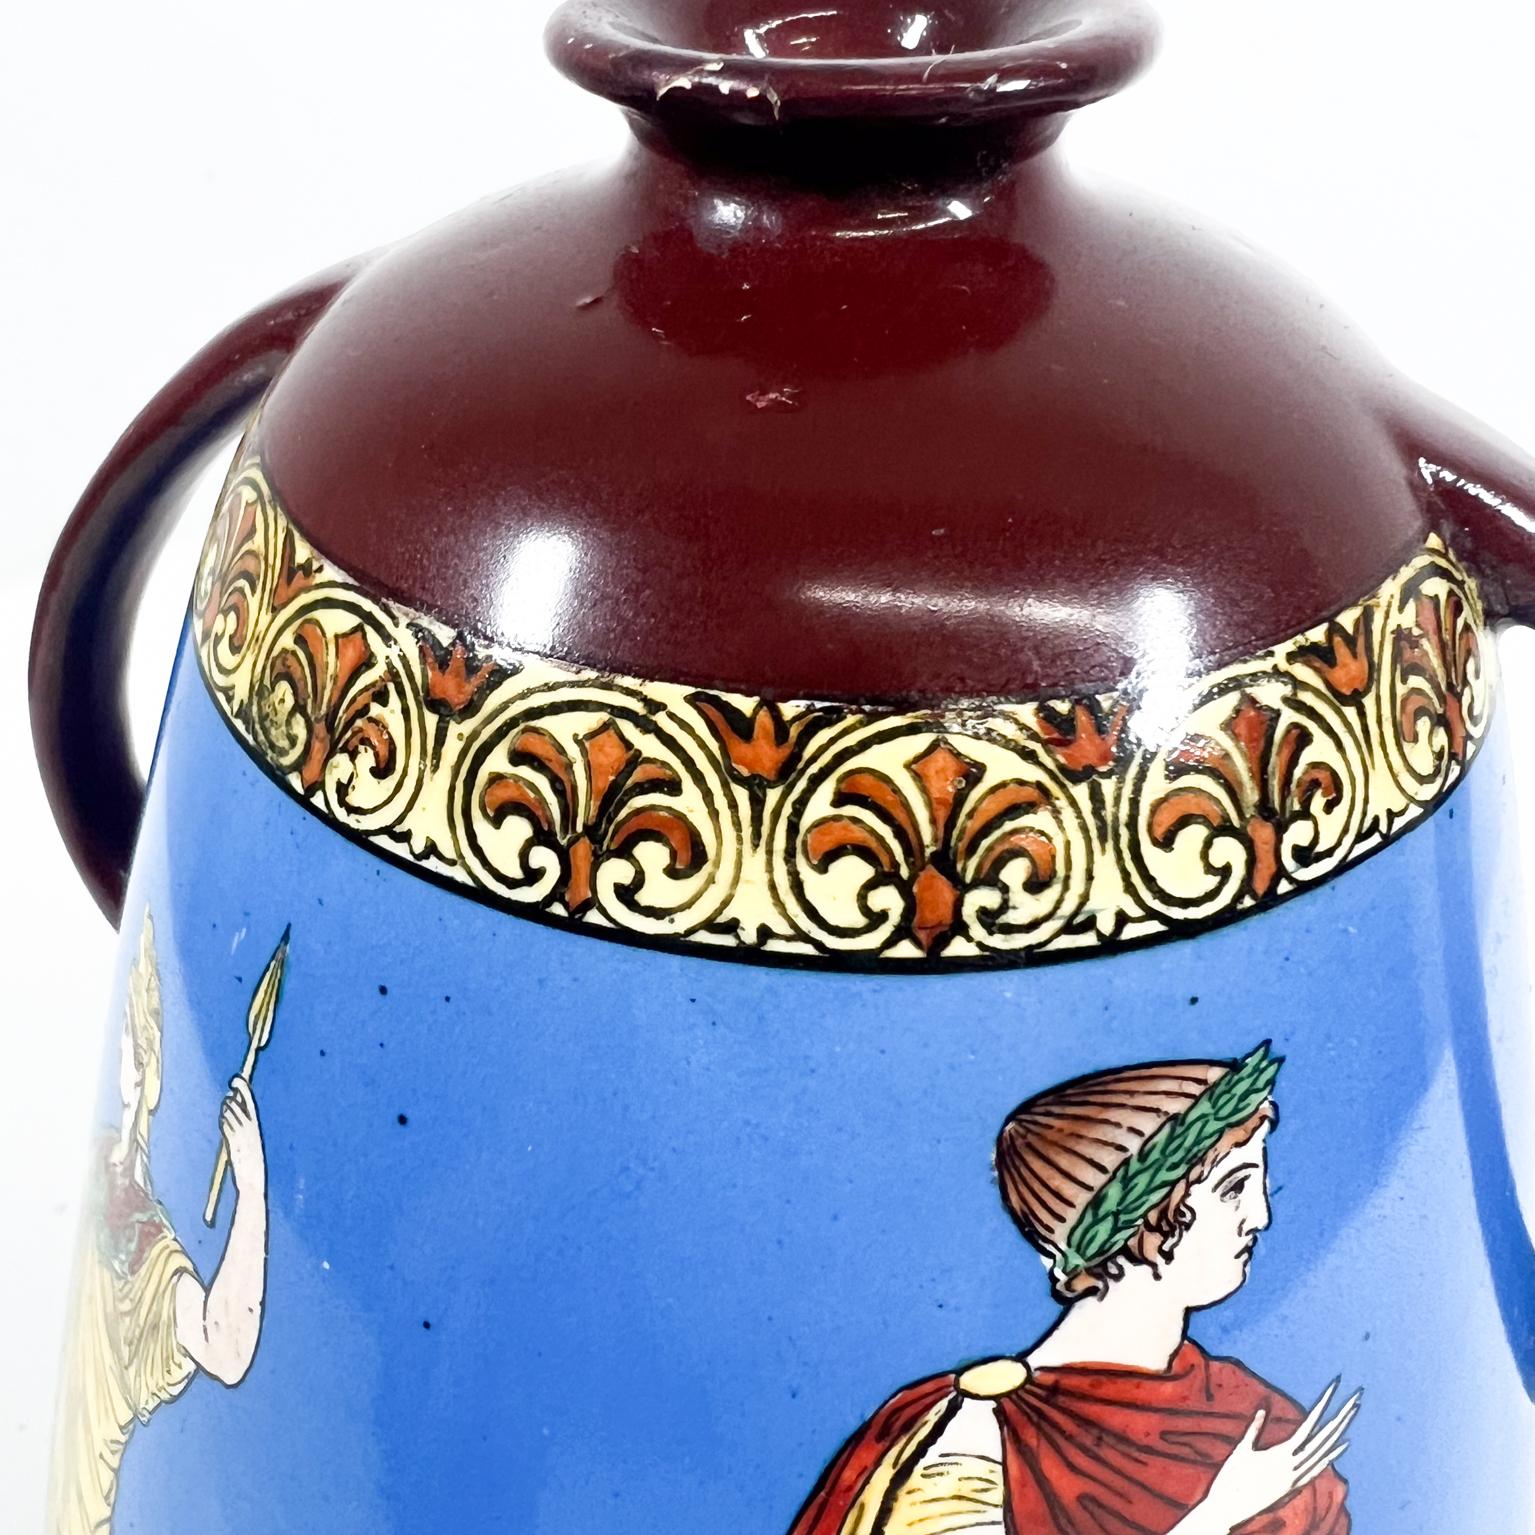 Early 20th Century 1903 Greek Revival Vase Frank Beardmore & Co Athenian Art Ware Fenton